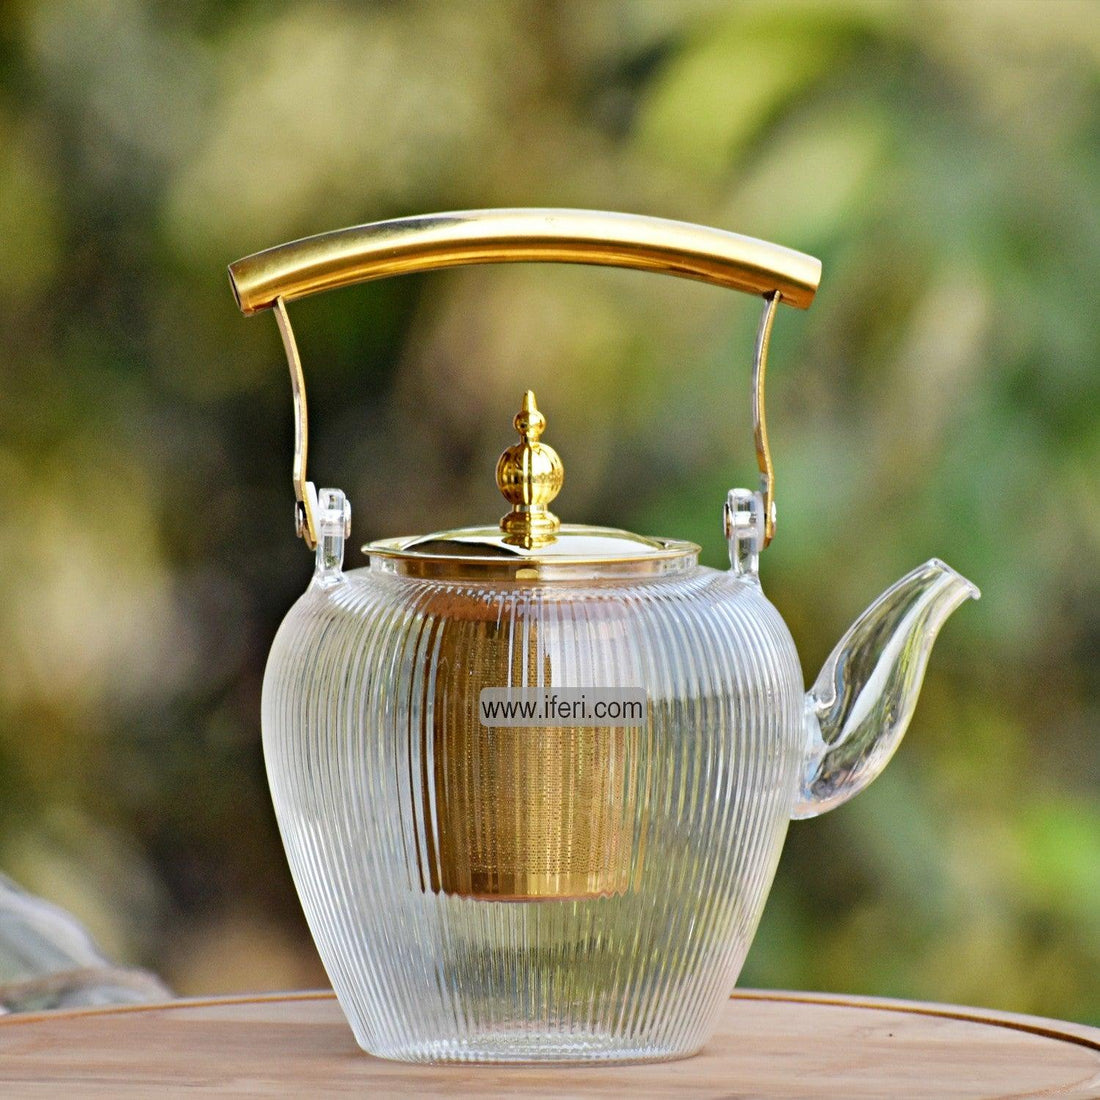 1100ml Tempered Glass Tea Pot with Infuser RY0137 Price in Bangladesh - iferi.com